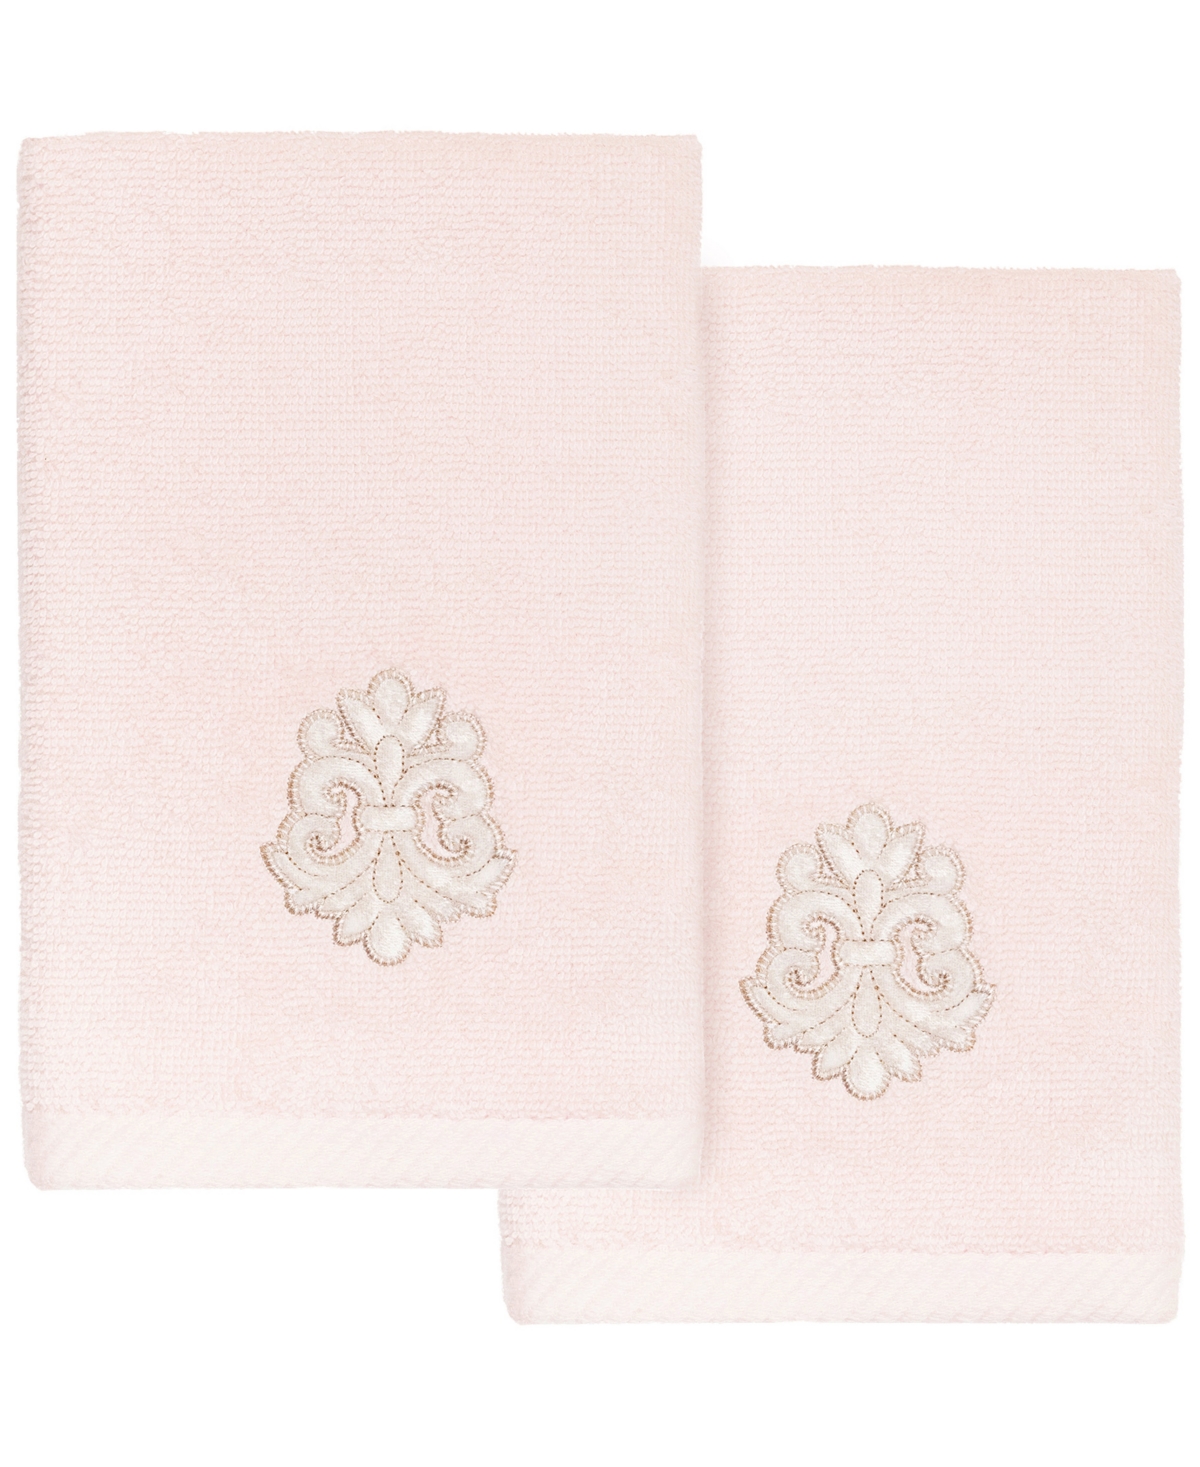 Linum Home Textiles Turkish Cotton May Embellished Fingertip Towel Set, 2 Piece Bedding In Blush